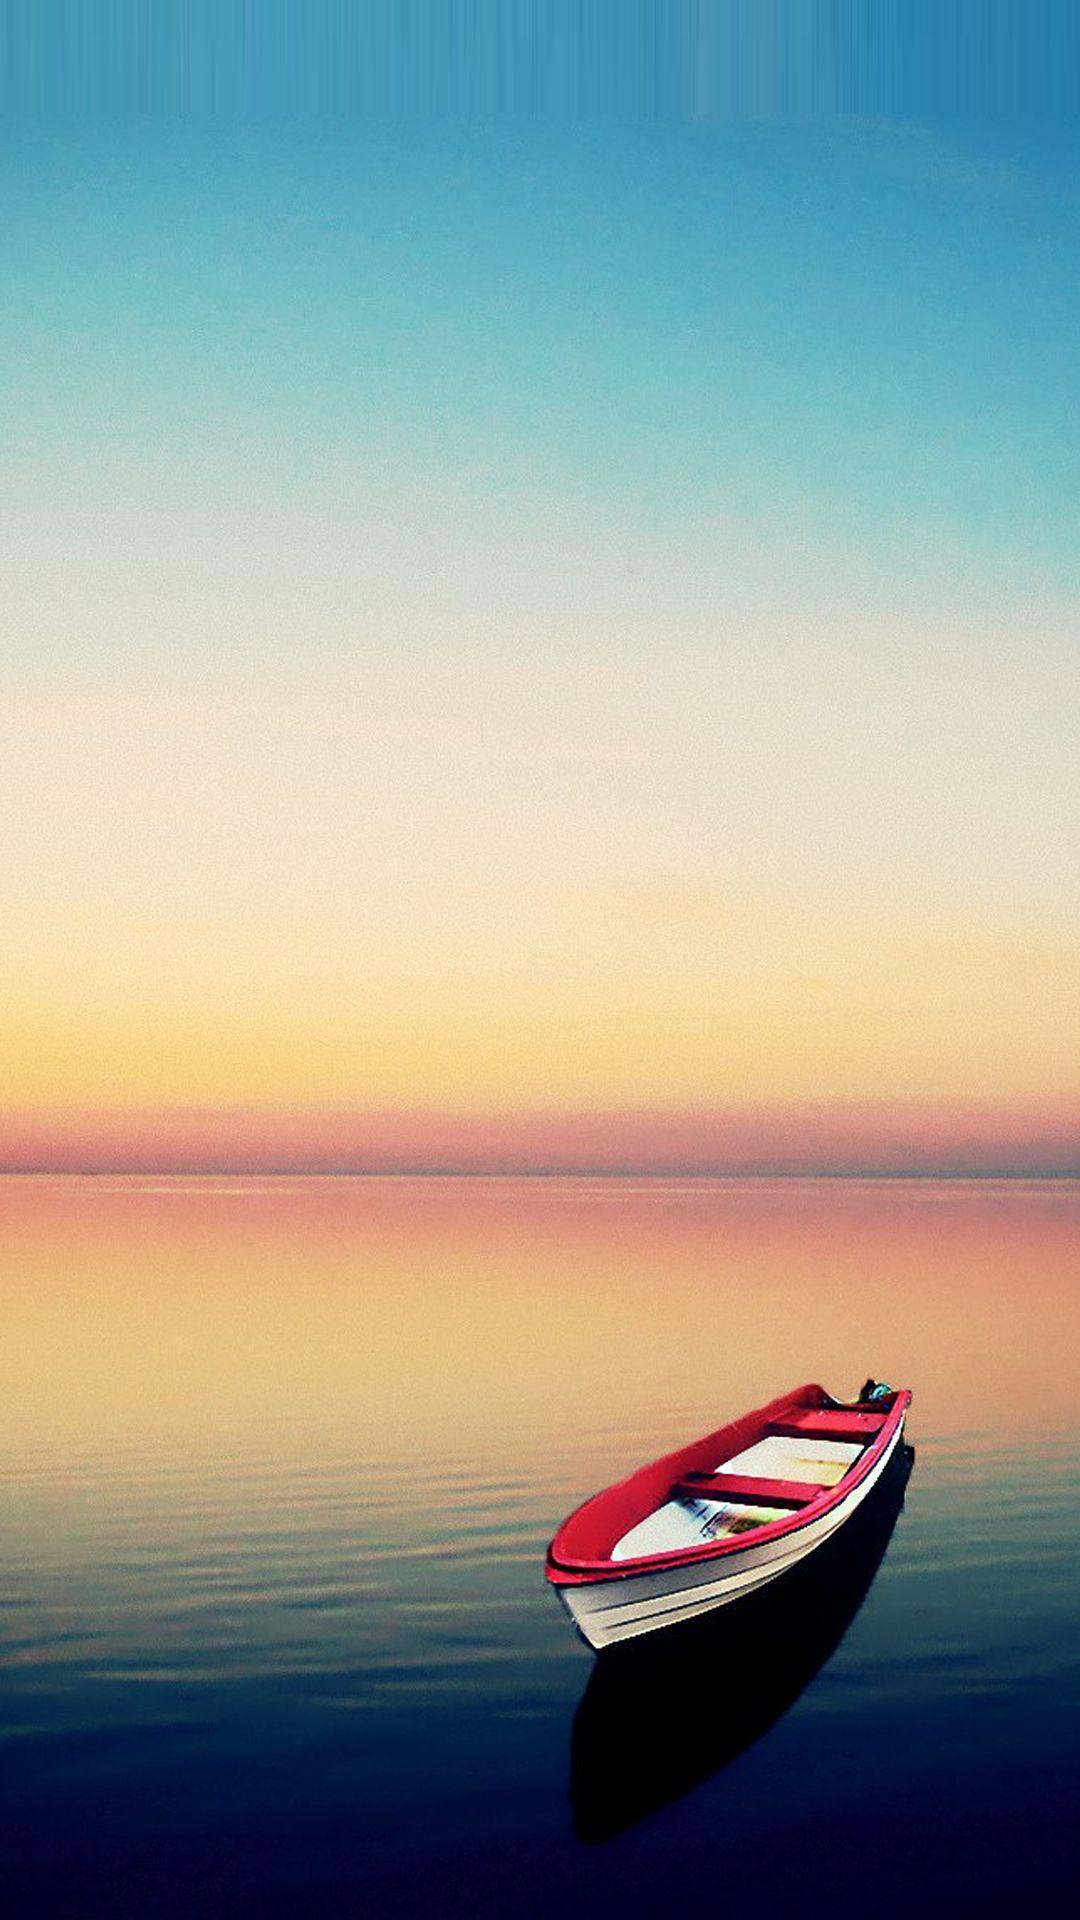 Boat at Sunset Smartphone HD Wallpaper. Samsung galaxy wallpaper